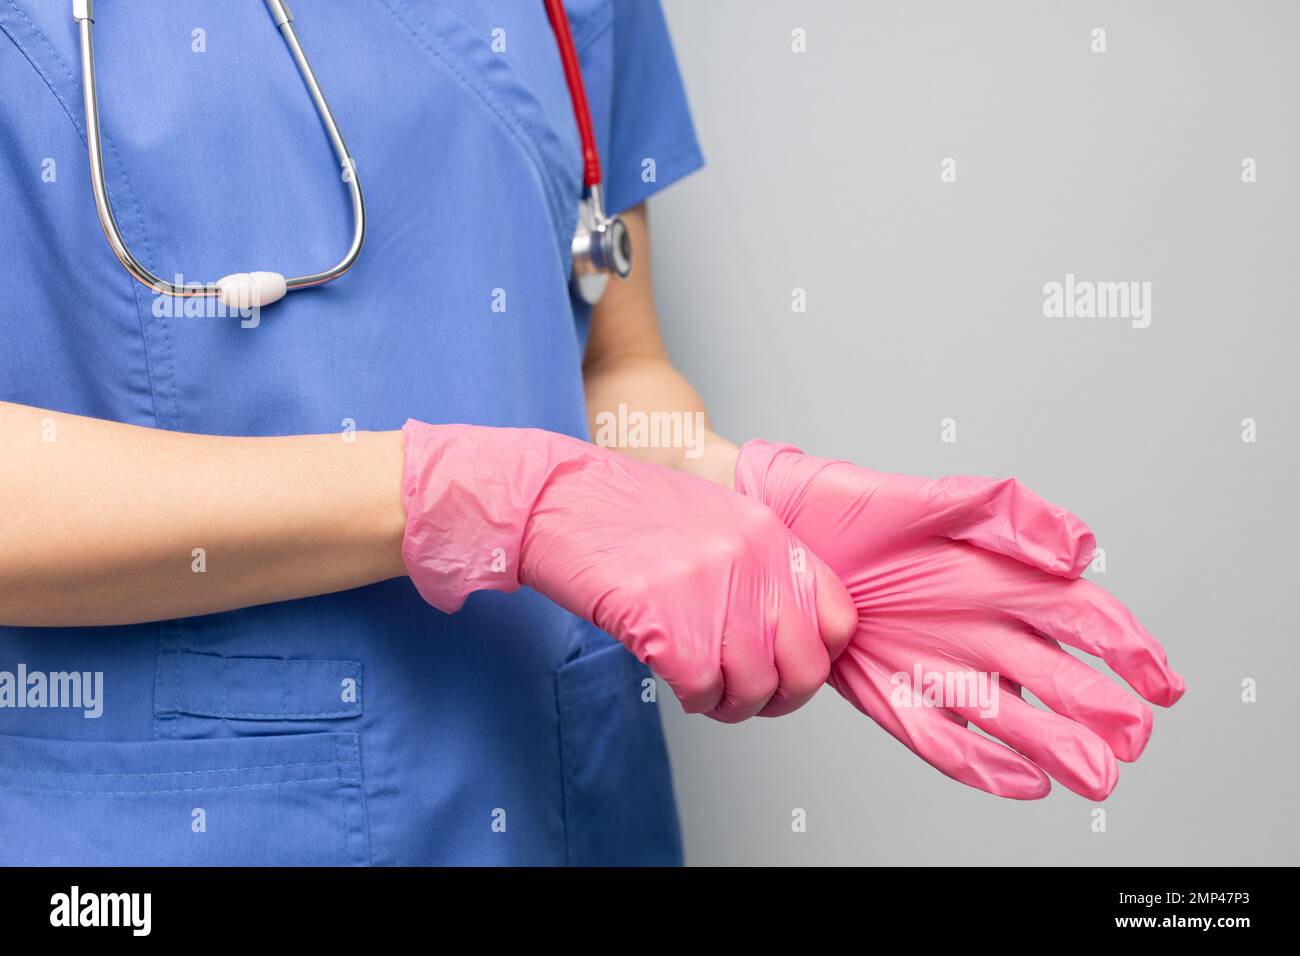 Arzt zieht gummihandschuhe an -Fotos und -Bildmaterial in hoher Auflösung –  Alamy